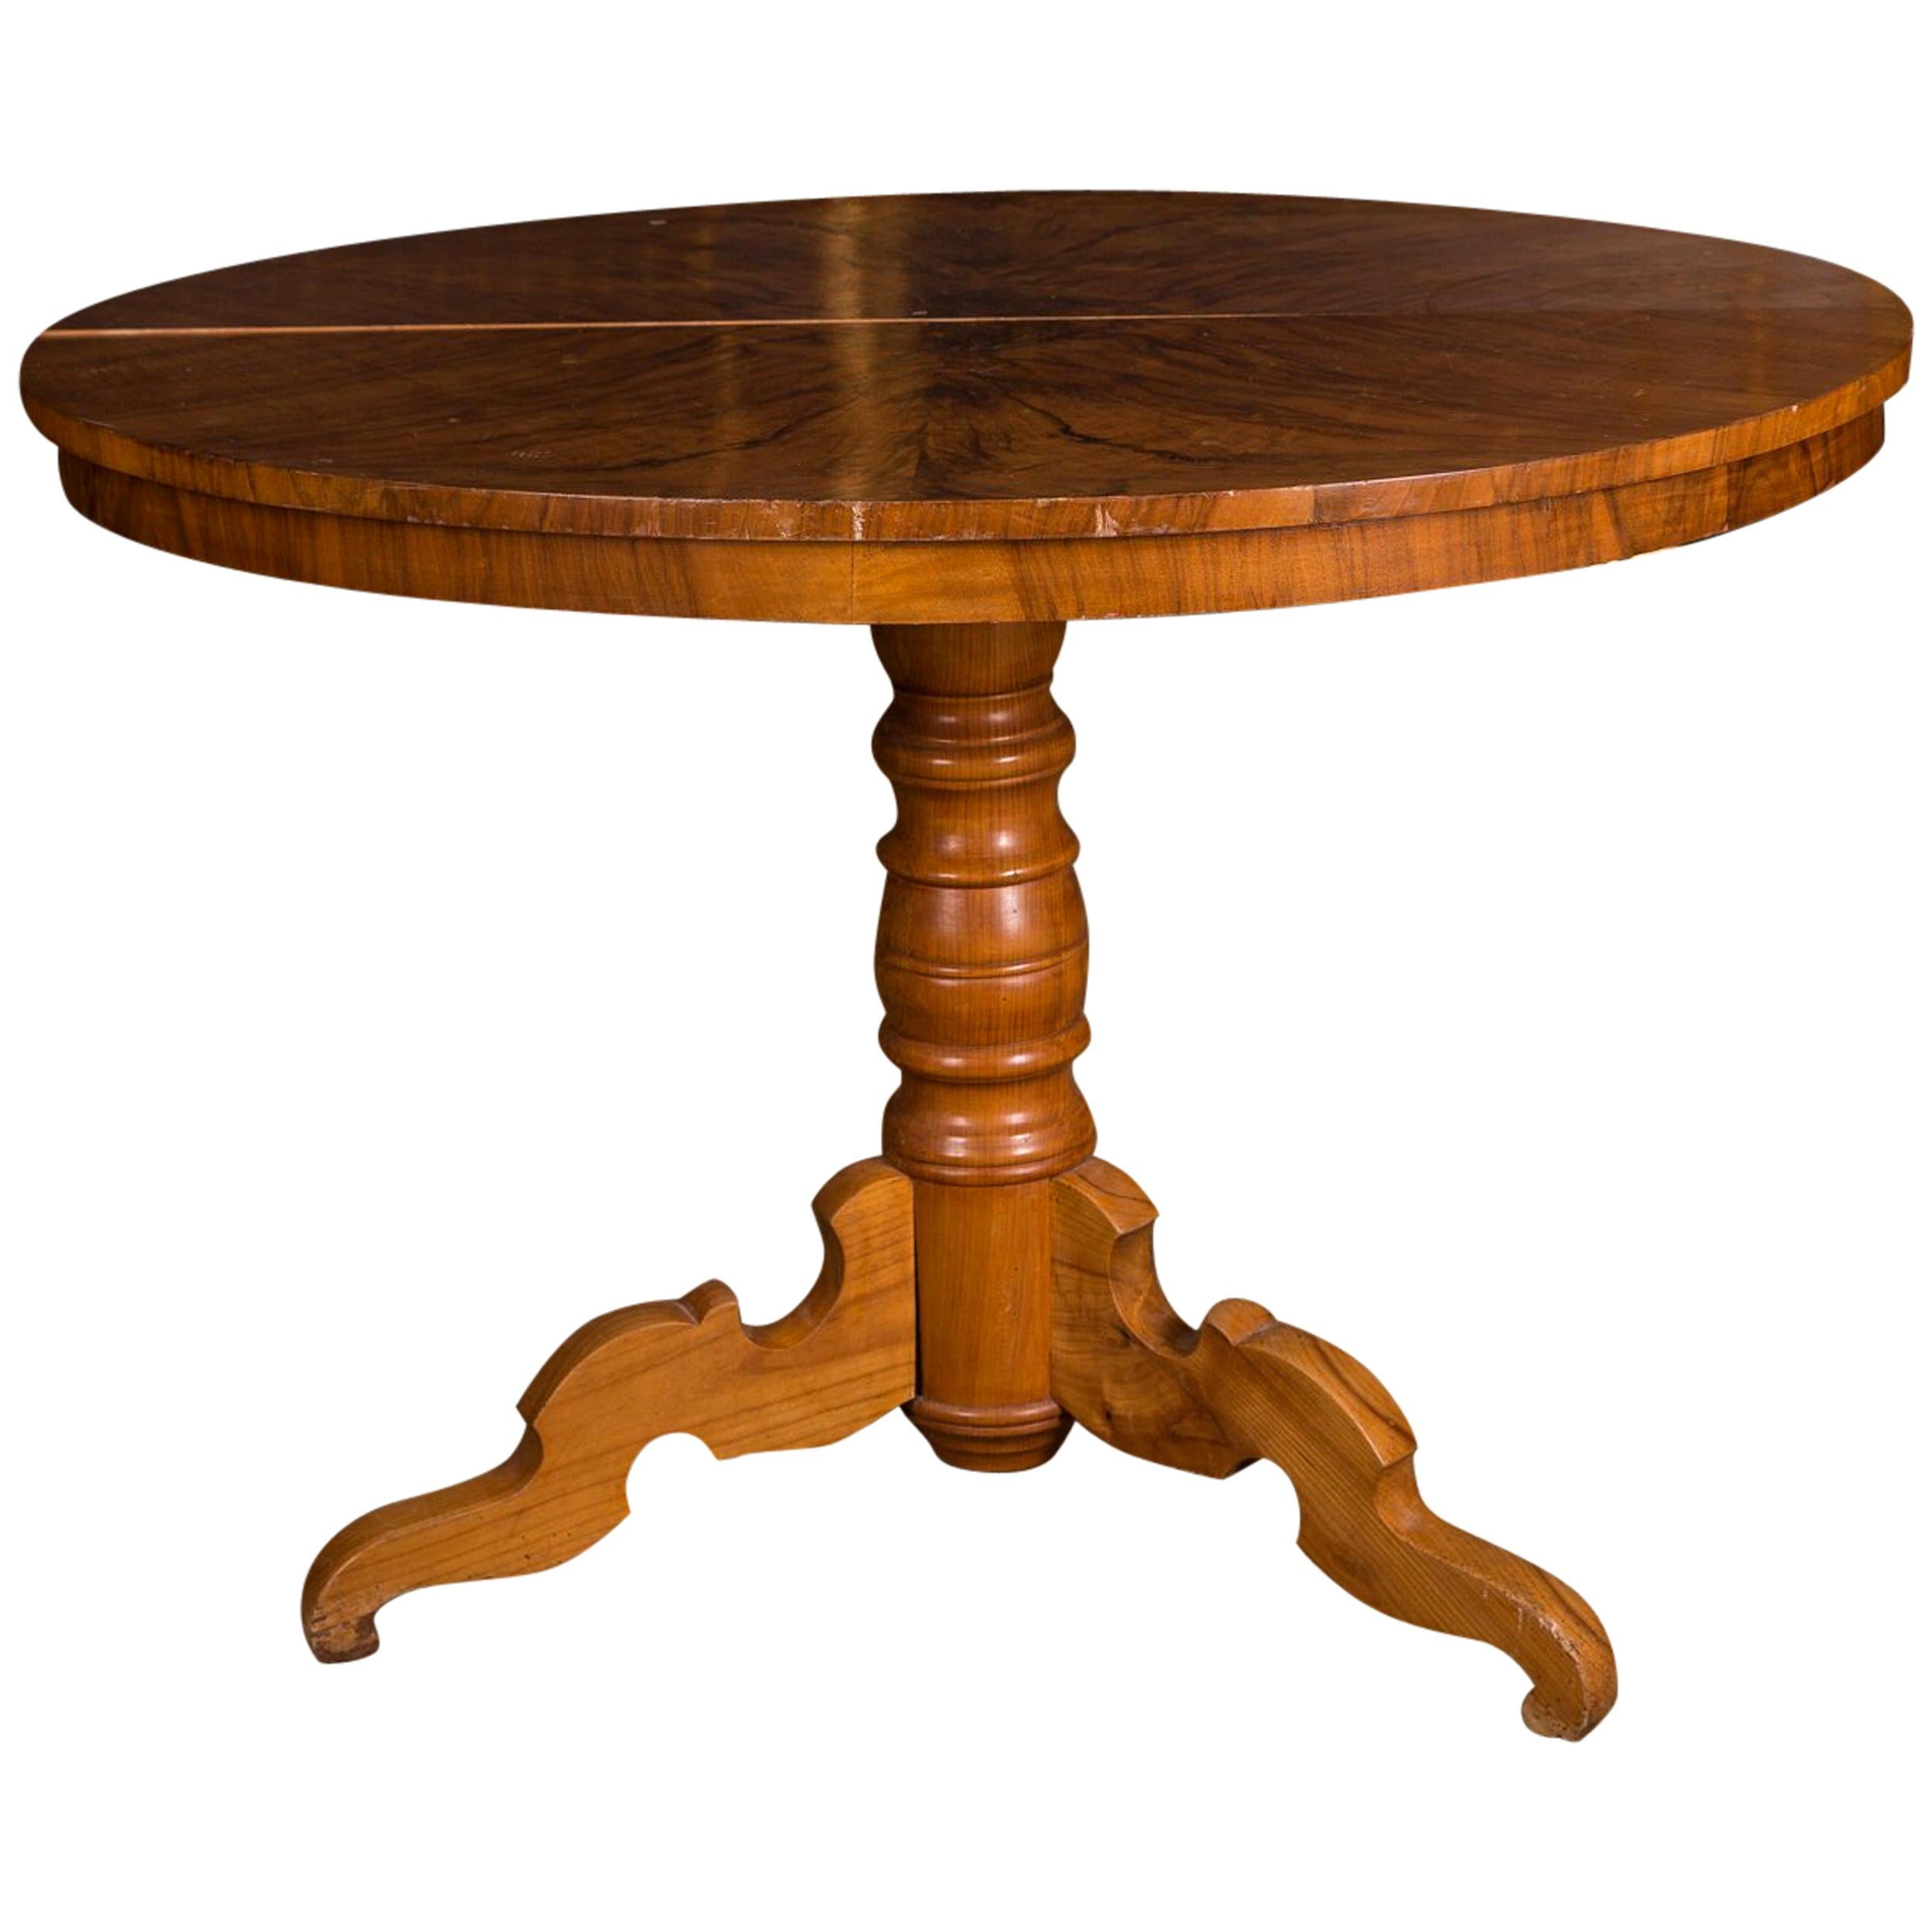 Original antique Biedermeier Table circa 1835 Walnut with walnut Root Veneer